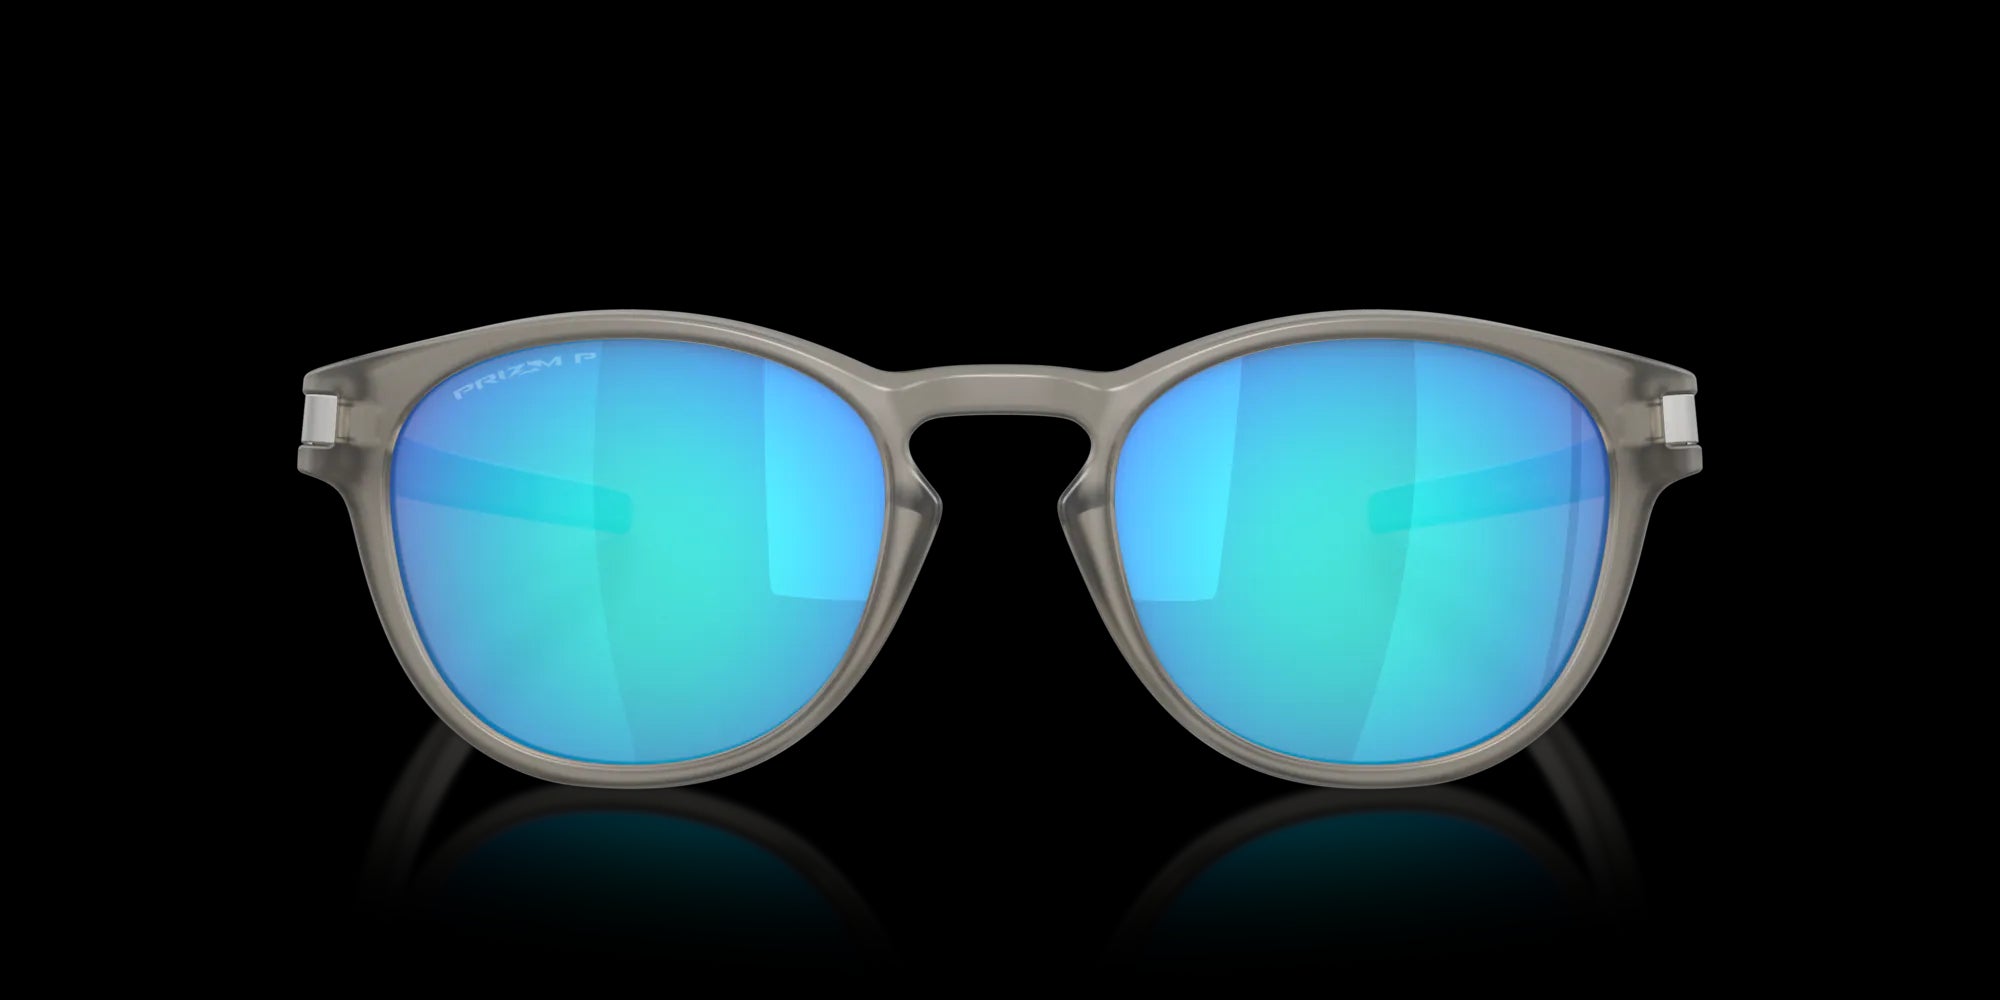 Gray/blue Latch sunglasses